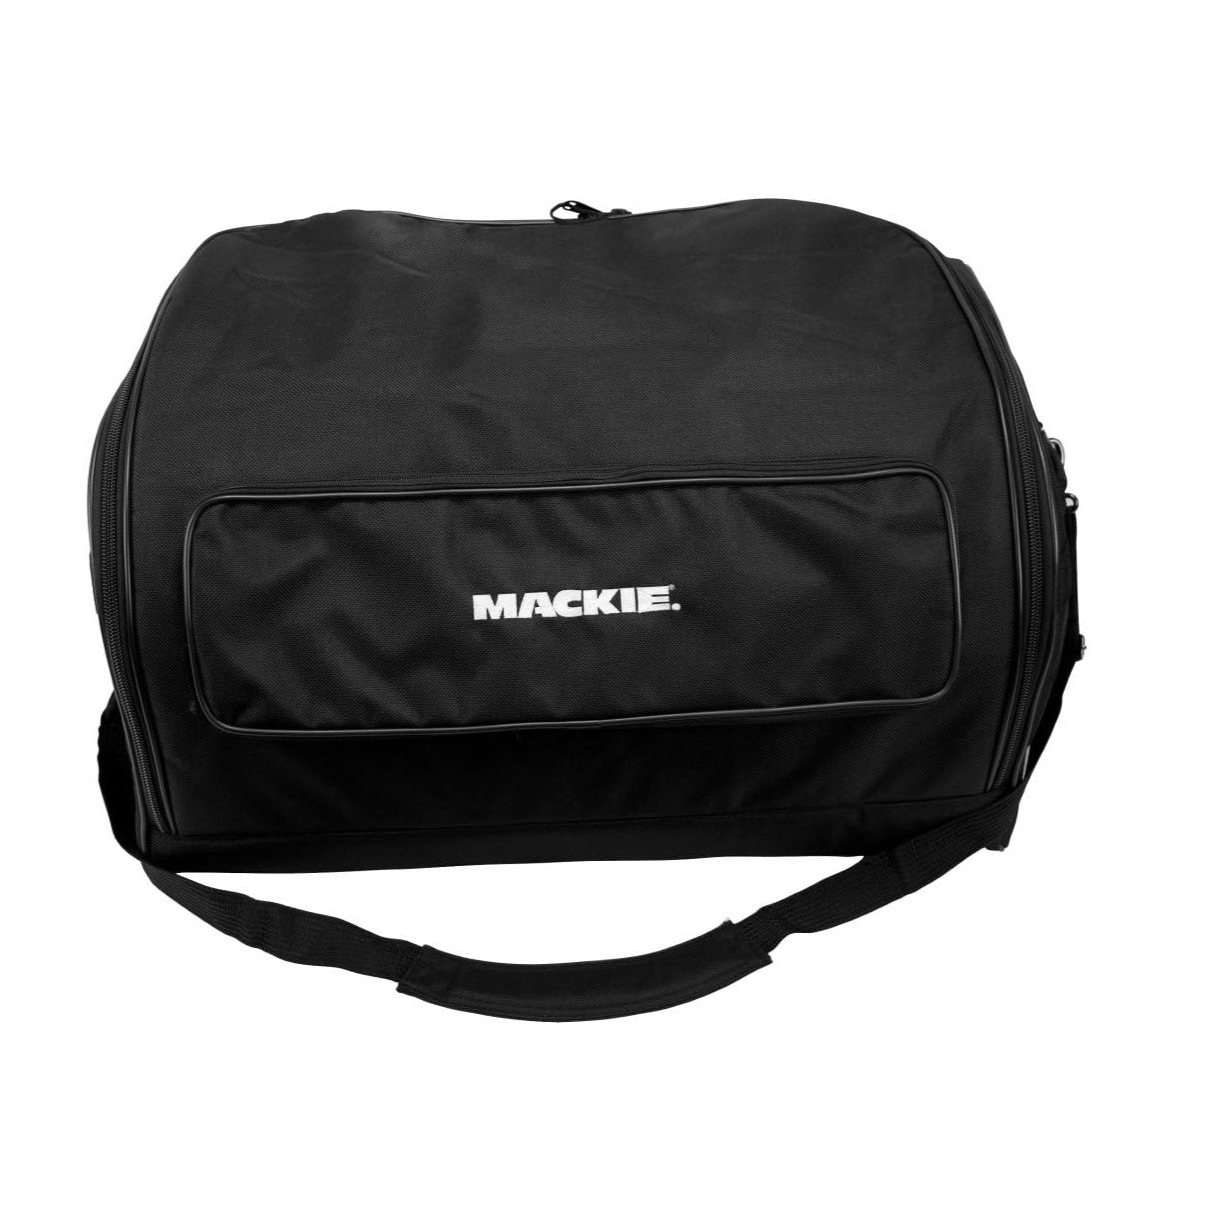 Mackie - Speaker Bag for SRM350 & C200